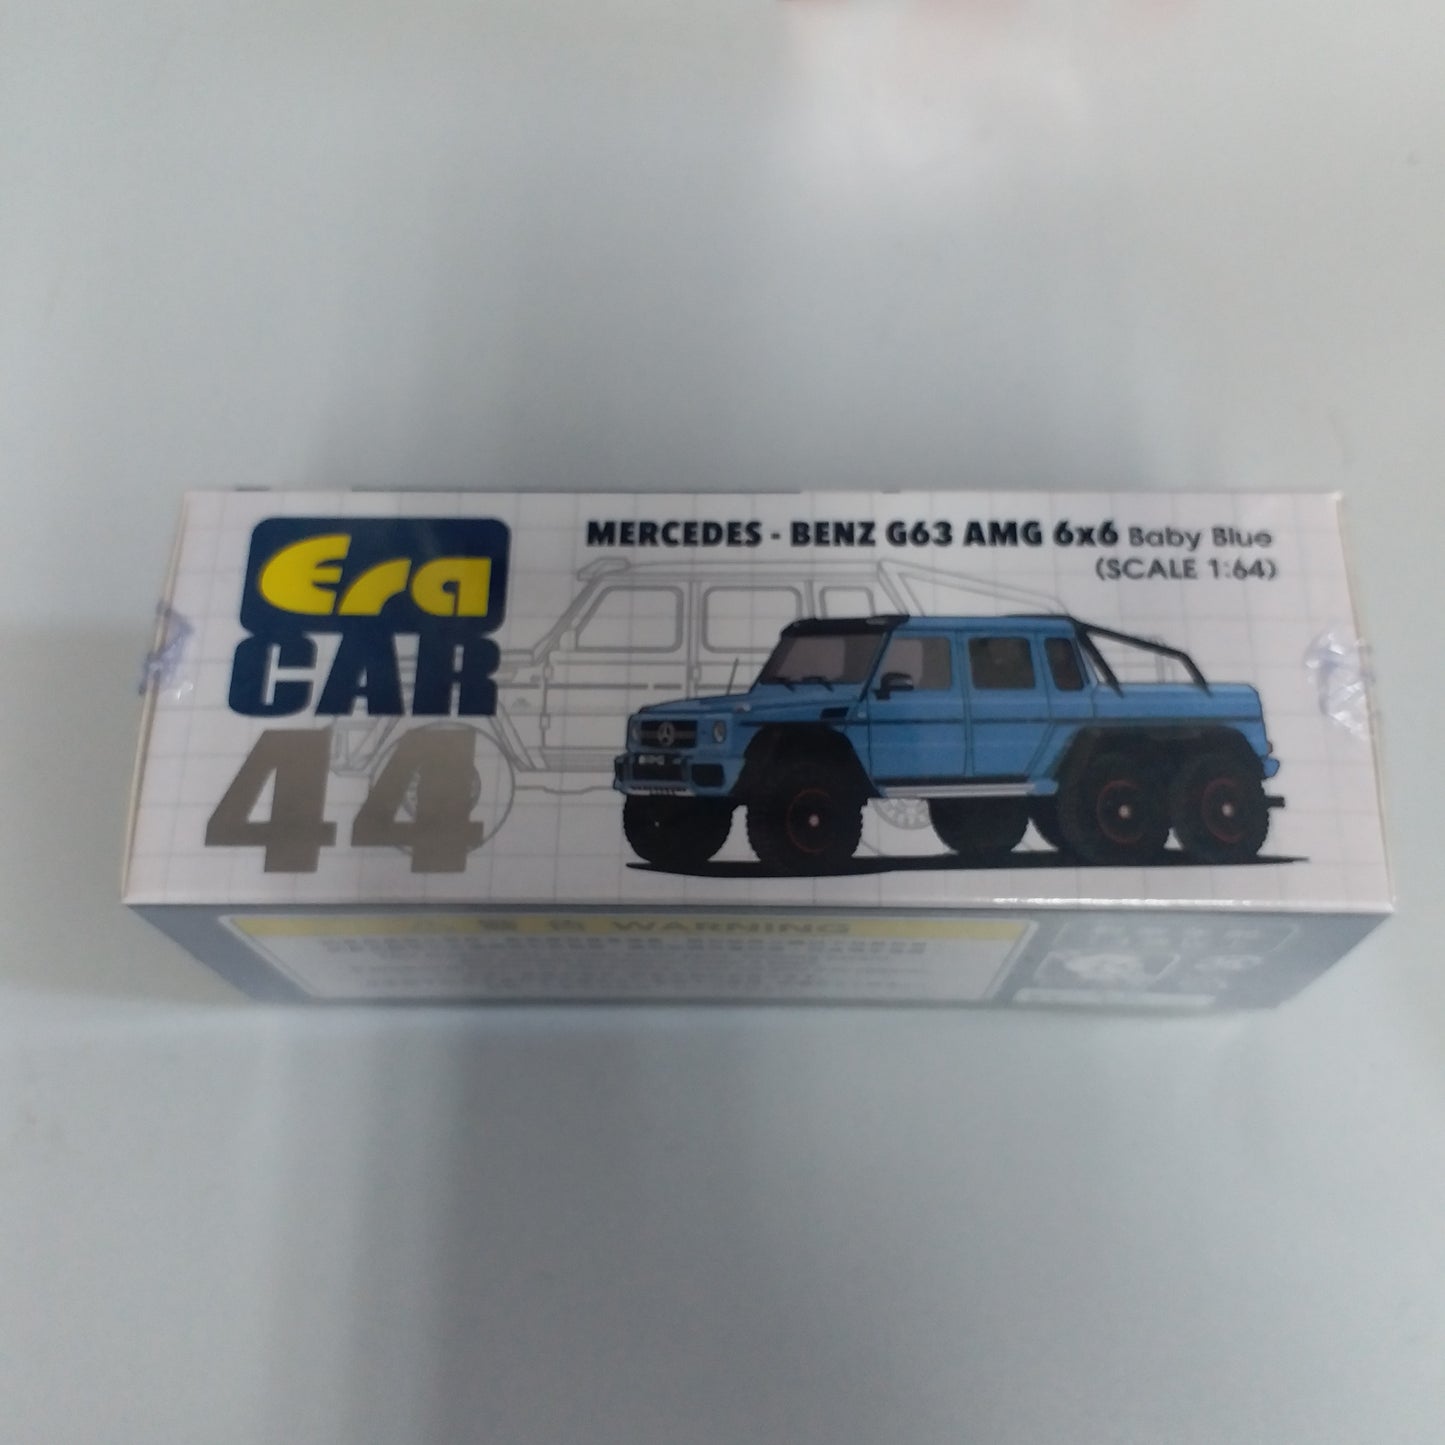 Era Car #44 Mercedes-Benz G63 AMG6X6 Baby Blue Scale 1:64